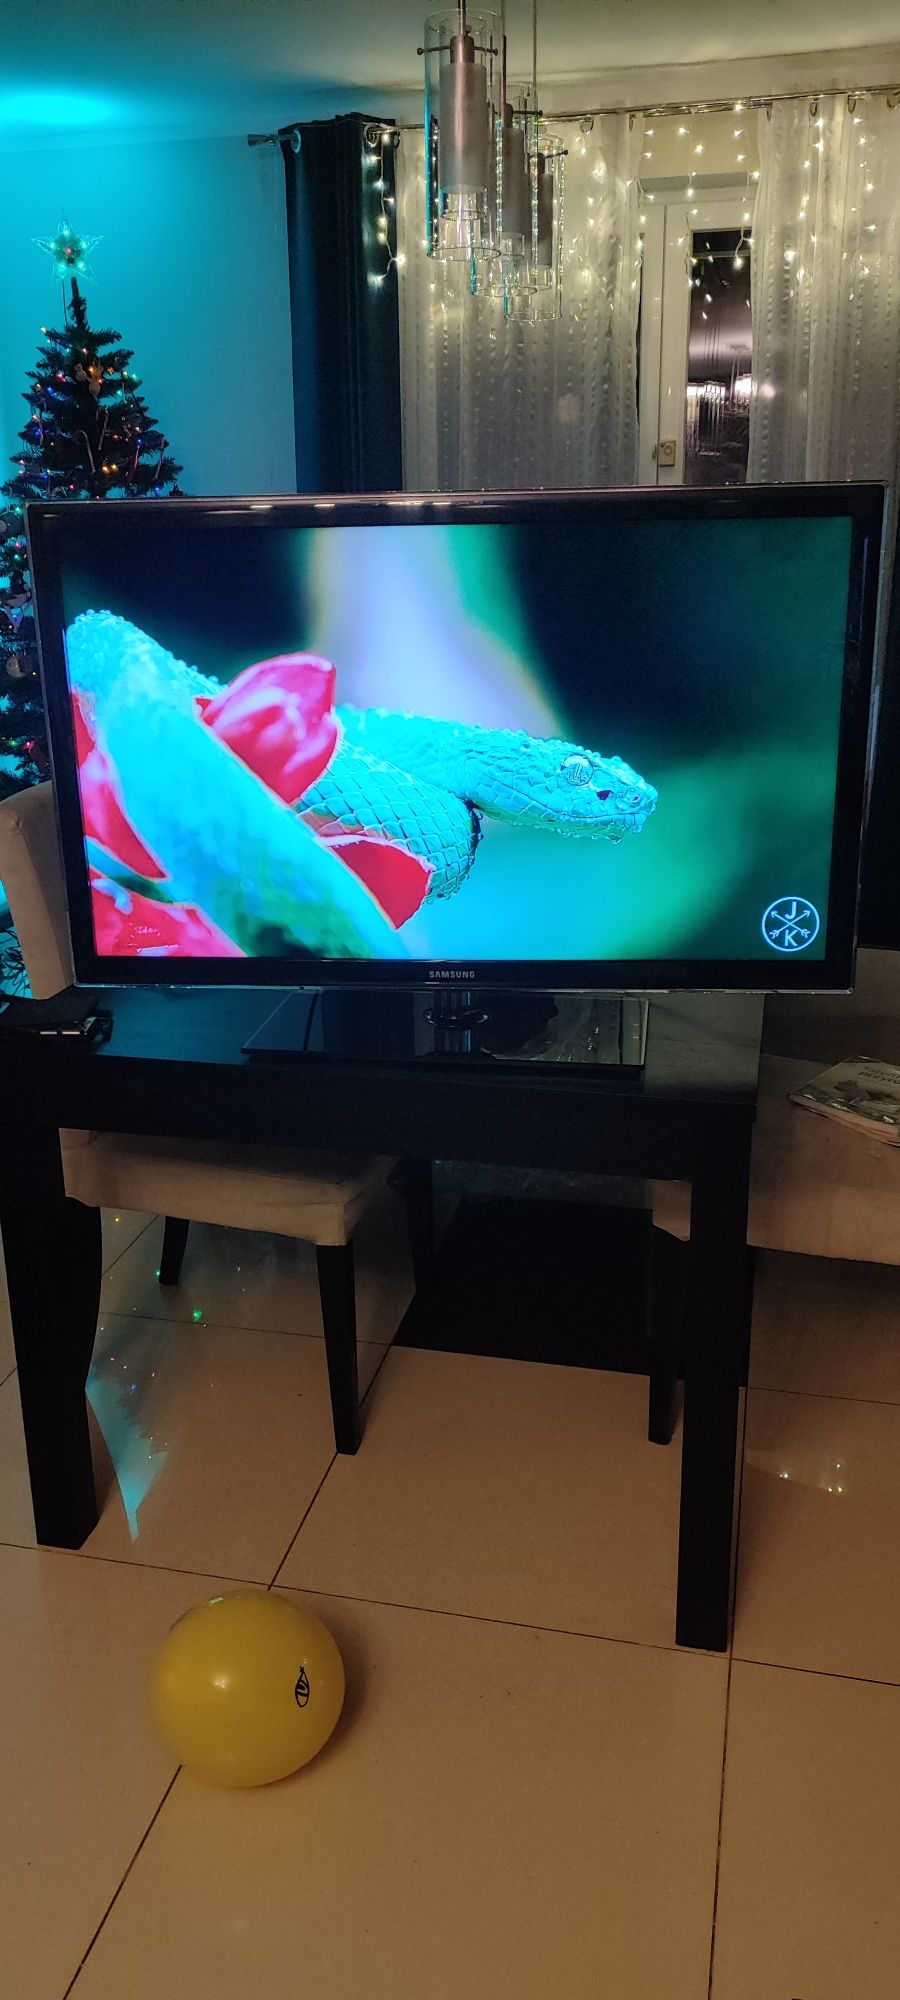 Tv Samsung 40" 100Hz 1080p wysoki model,piękny obraz, sprawny 100%